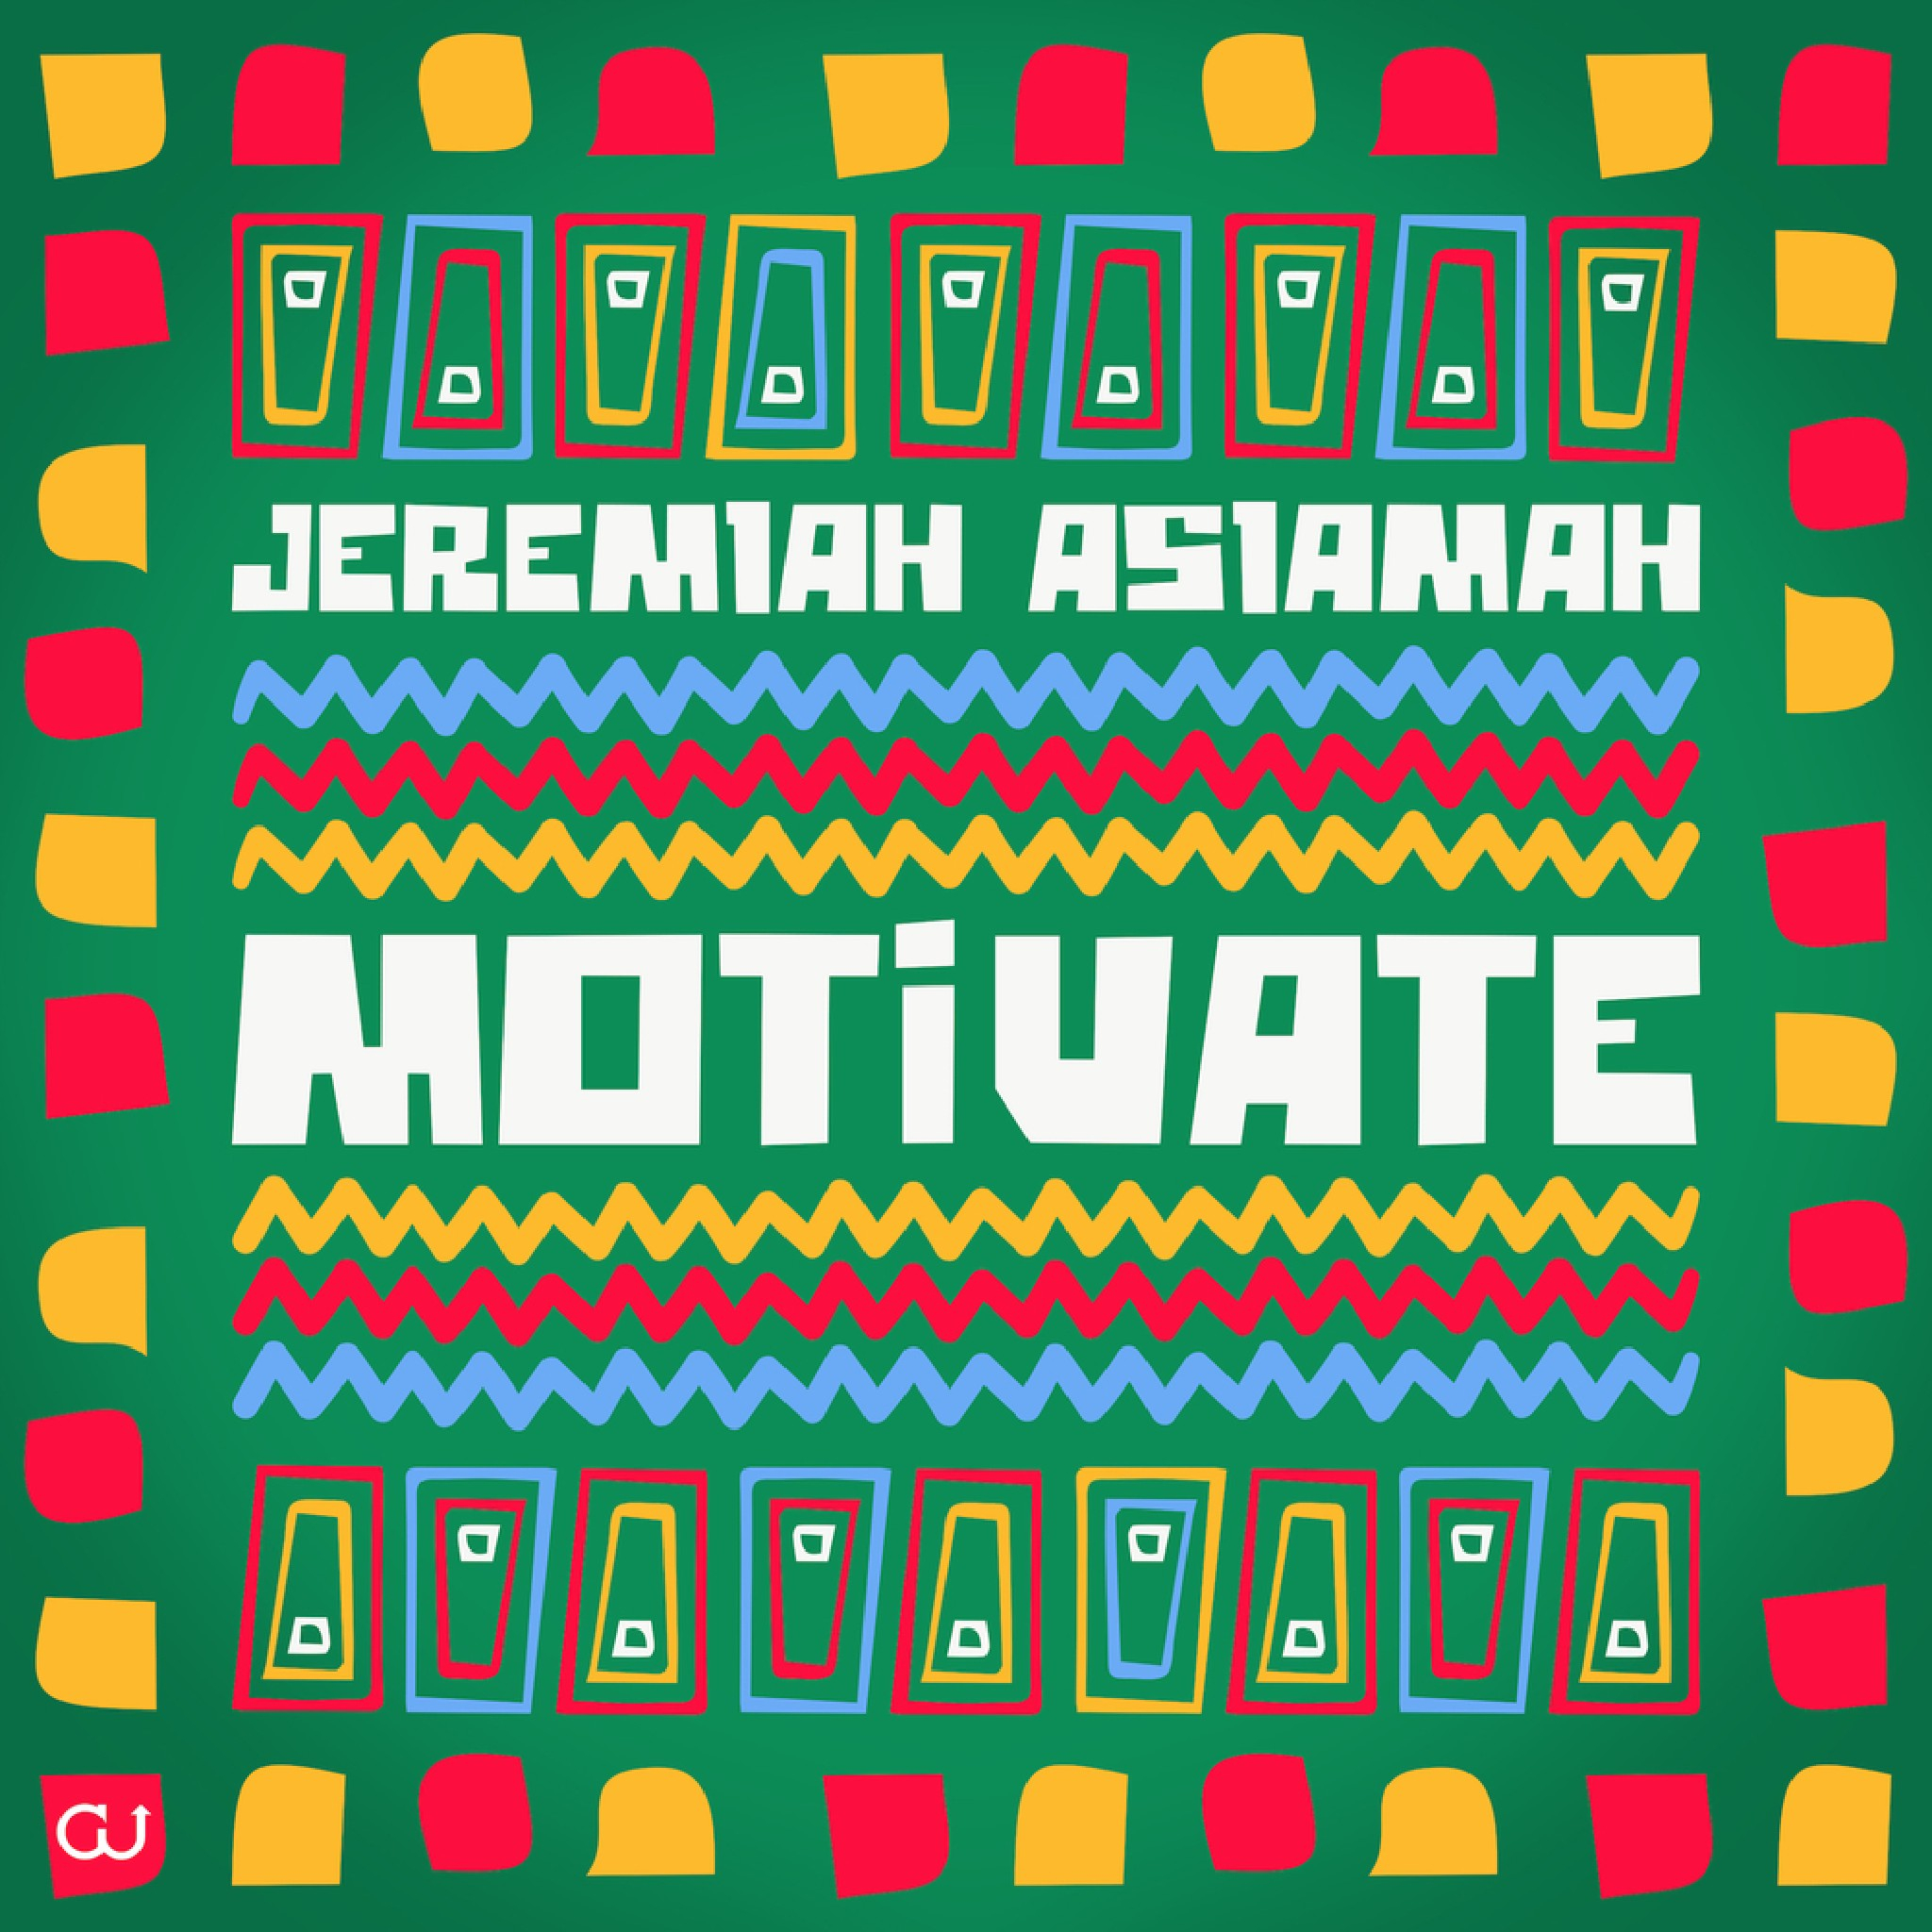 Jeremiah Asiamah 'Motivate'